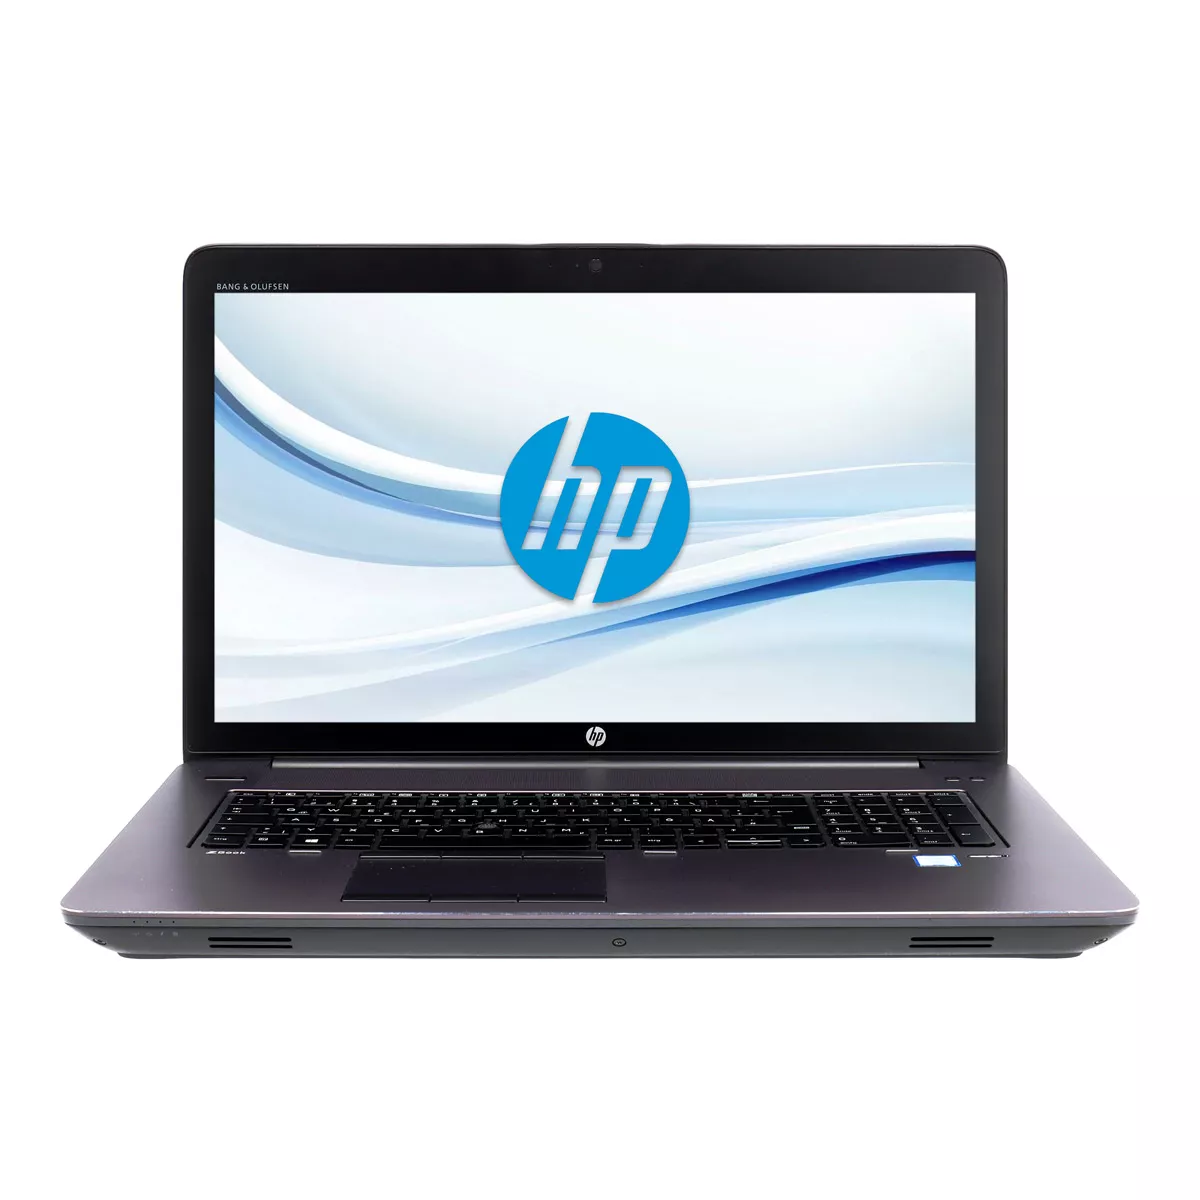 HP ZBook 17 G3 Core i7 6820HQ nVidia Quadro M3000M 4,0 GB Full-HD 512 GB M.2 SSD Webcam B-Ware